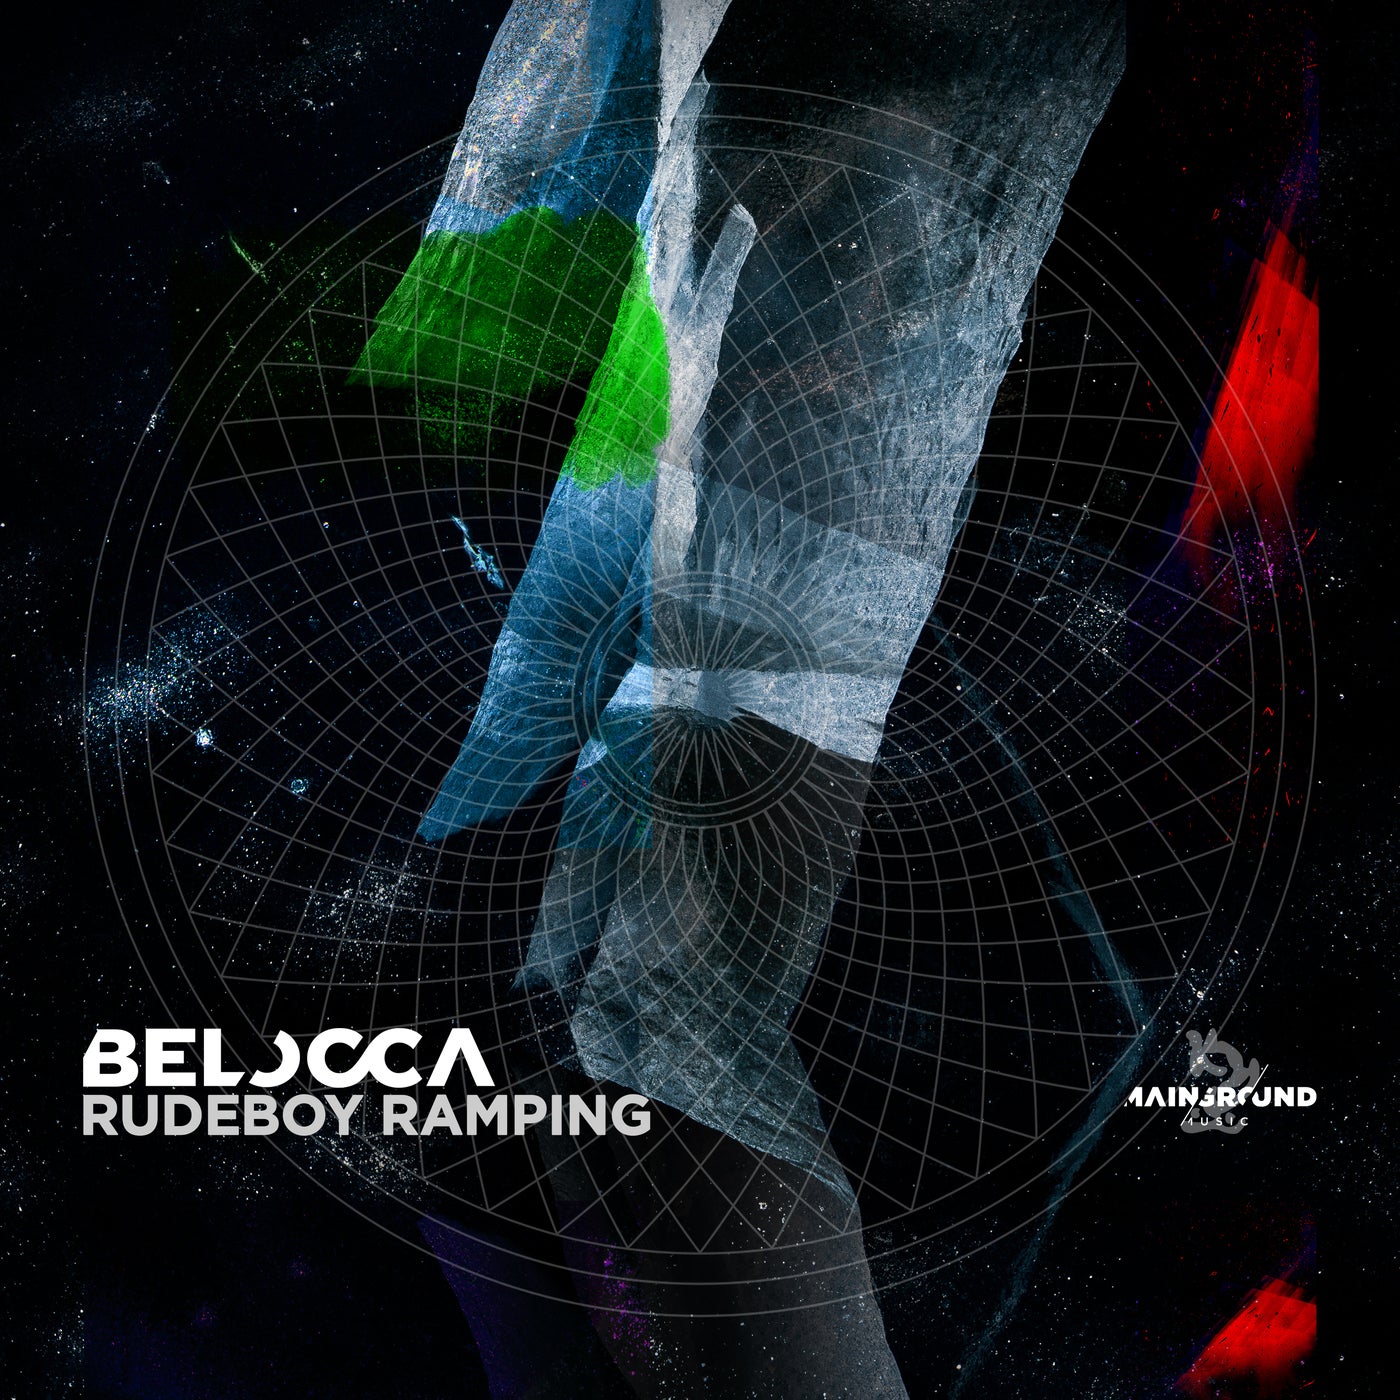 image cover: Belocca - Rudeboy Ramping on Mainground Music